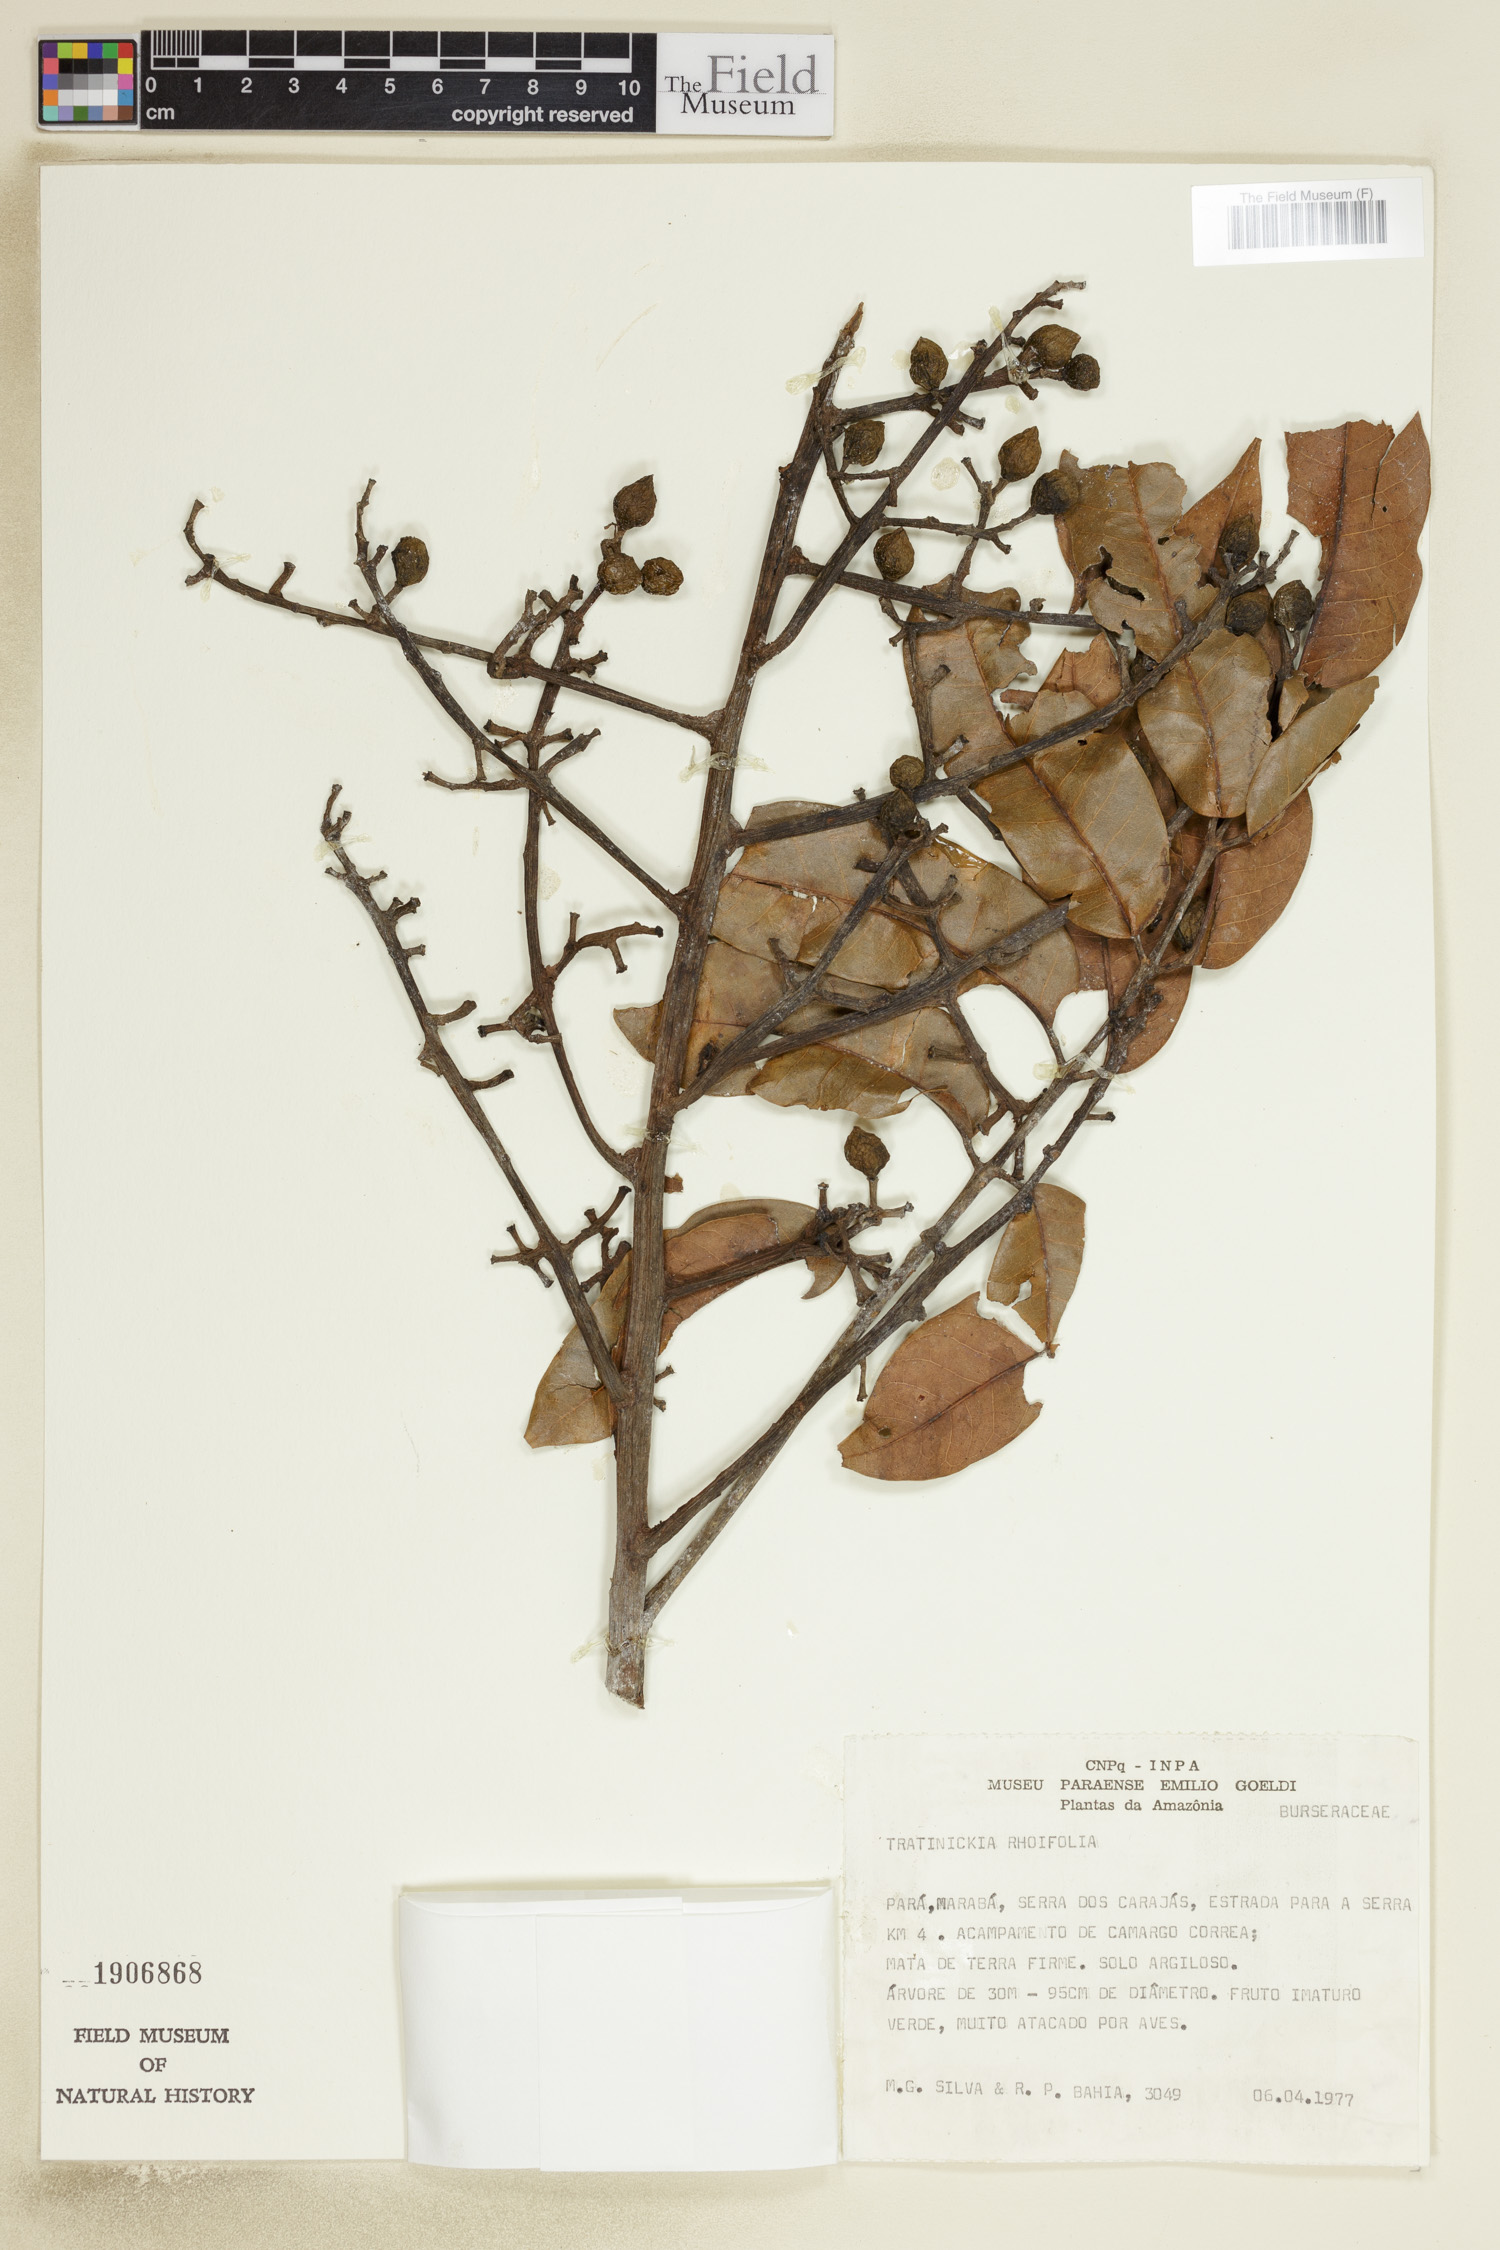 Trattinnickia rhoifolia image